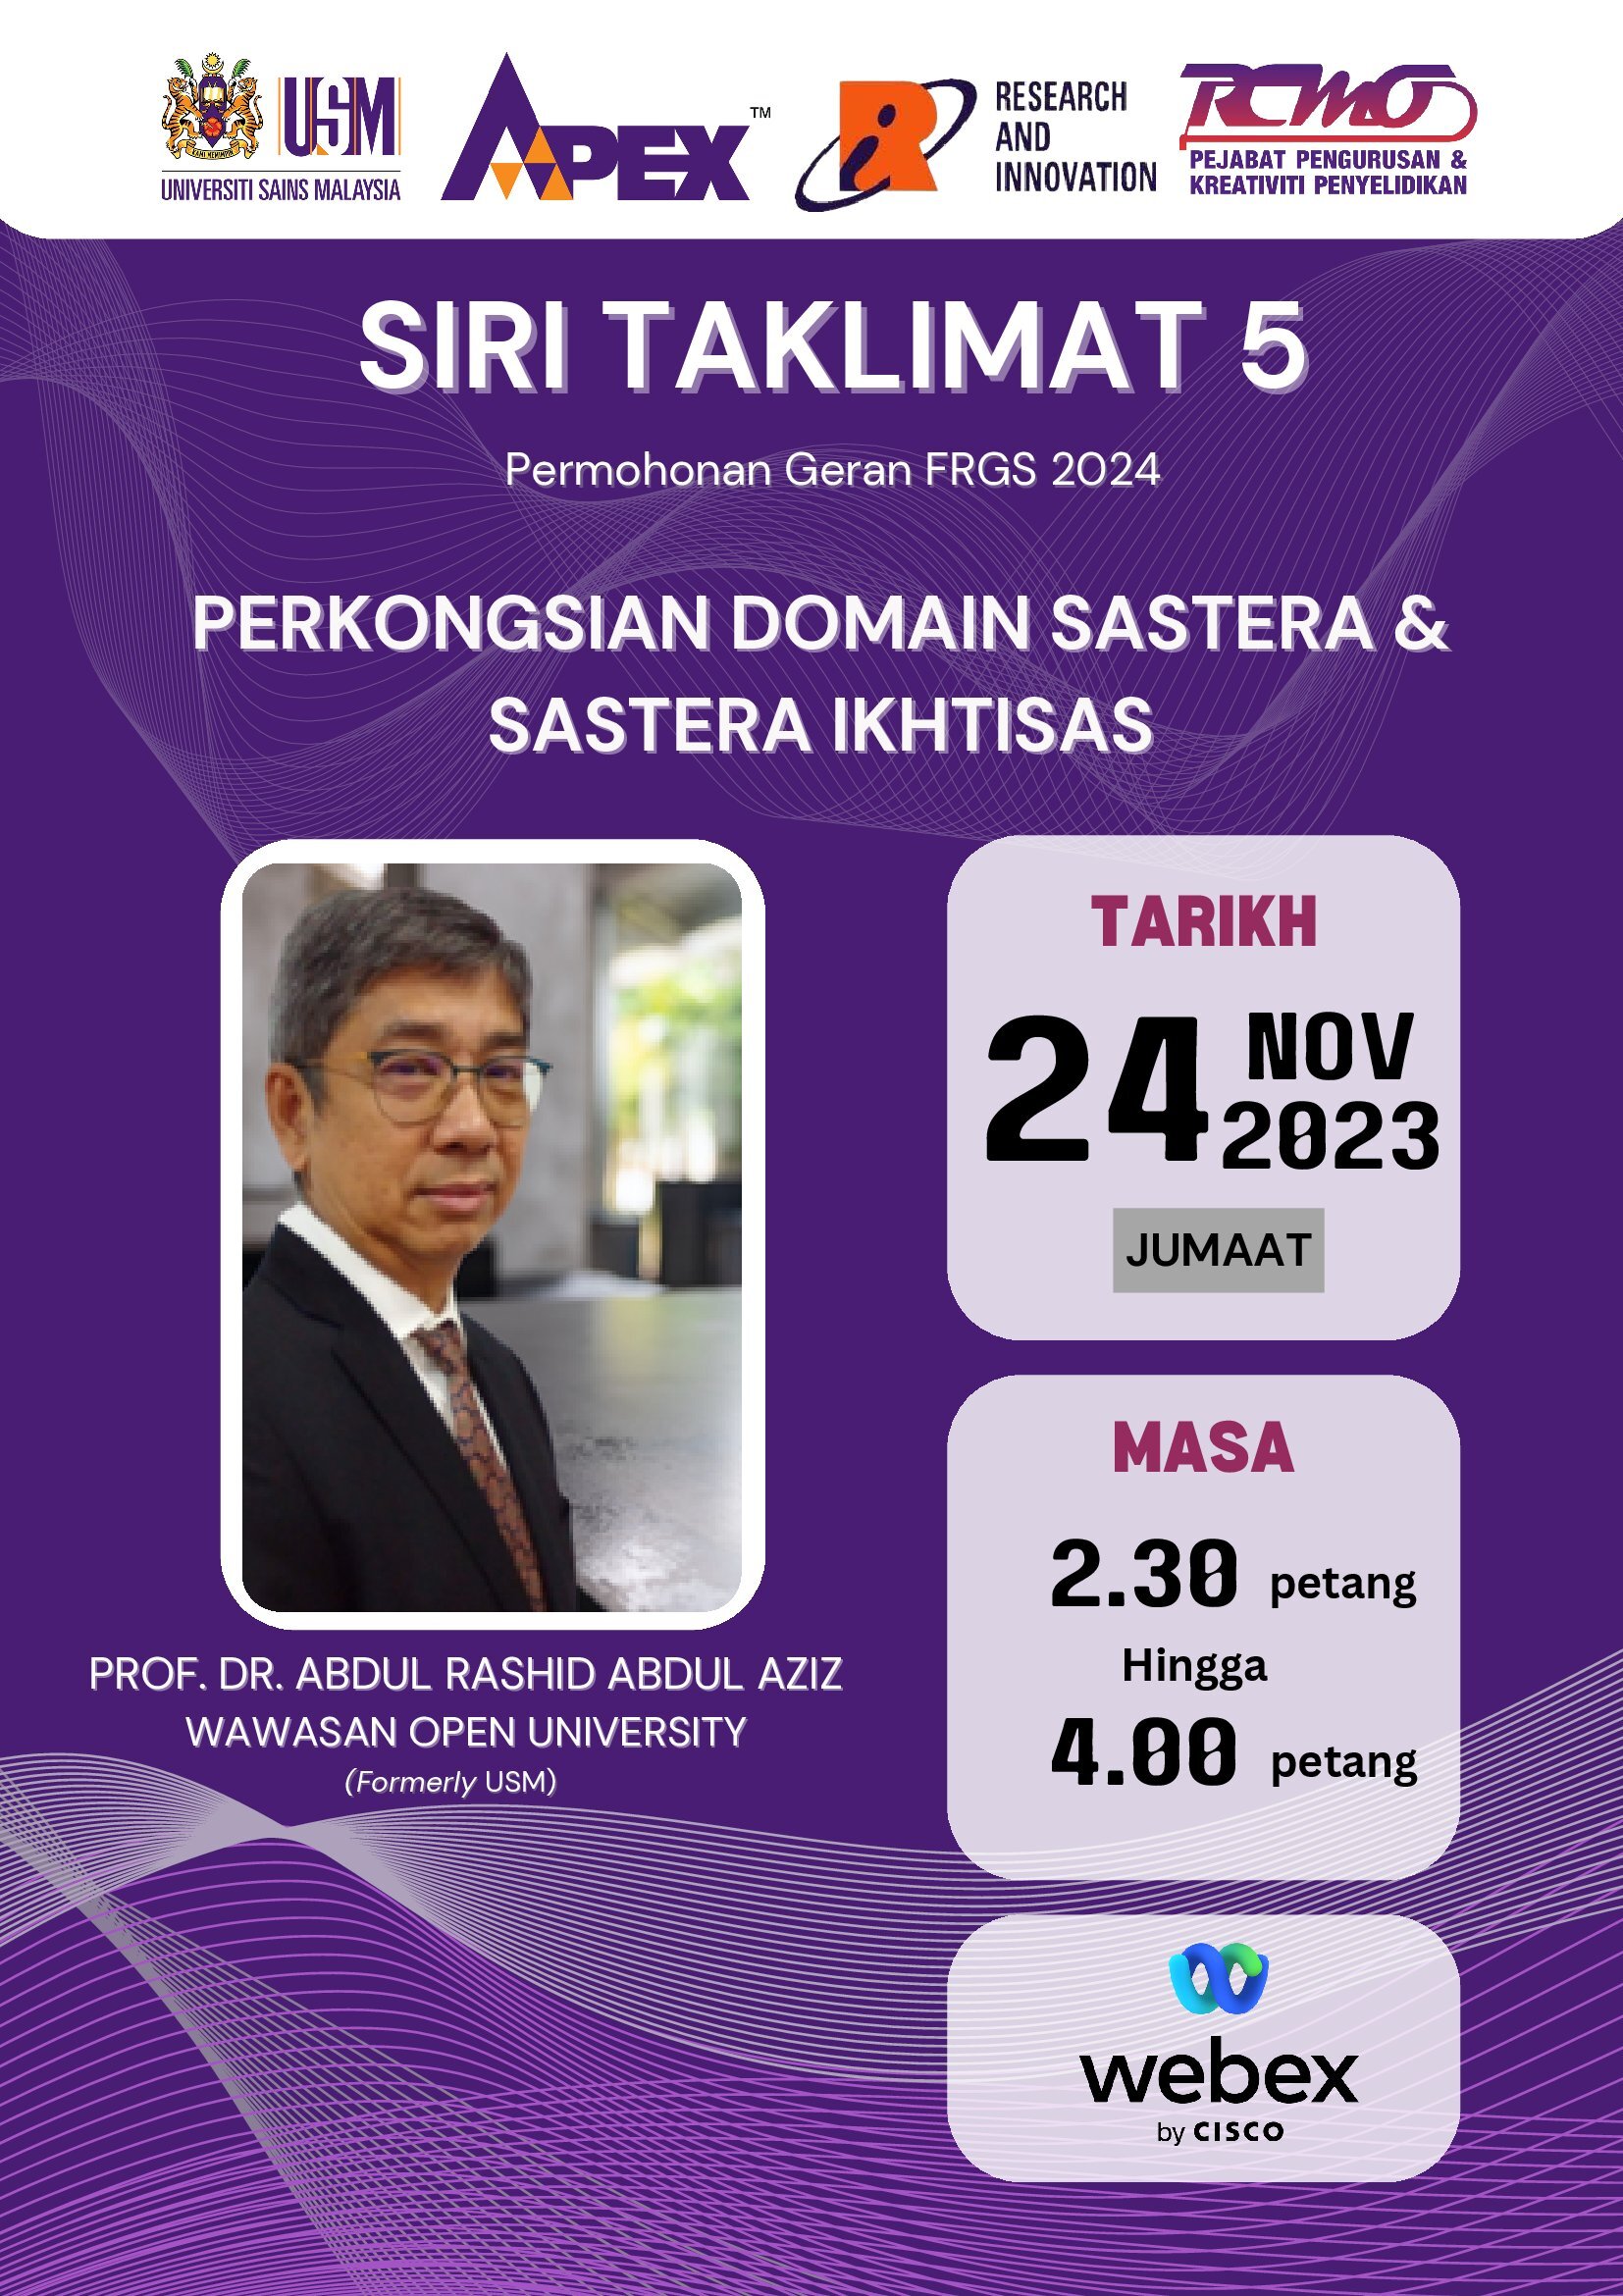 eposter SIRI TAKLIMAT 5 - PERKONGSIAN DOMAIN SASTERA & SASTERA IKHTISAS BAGI PERMOHONAN FRGS 2024